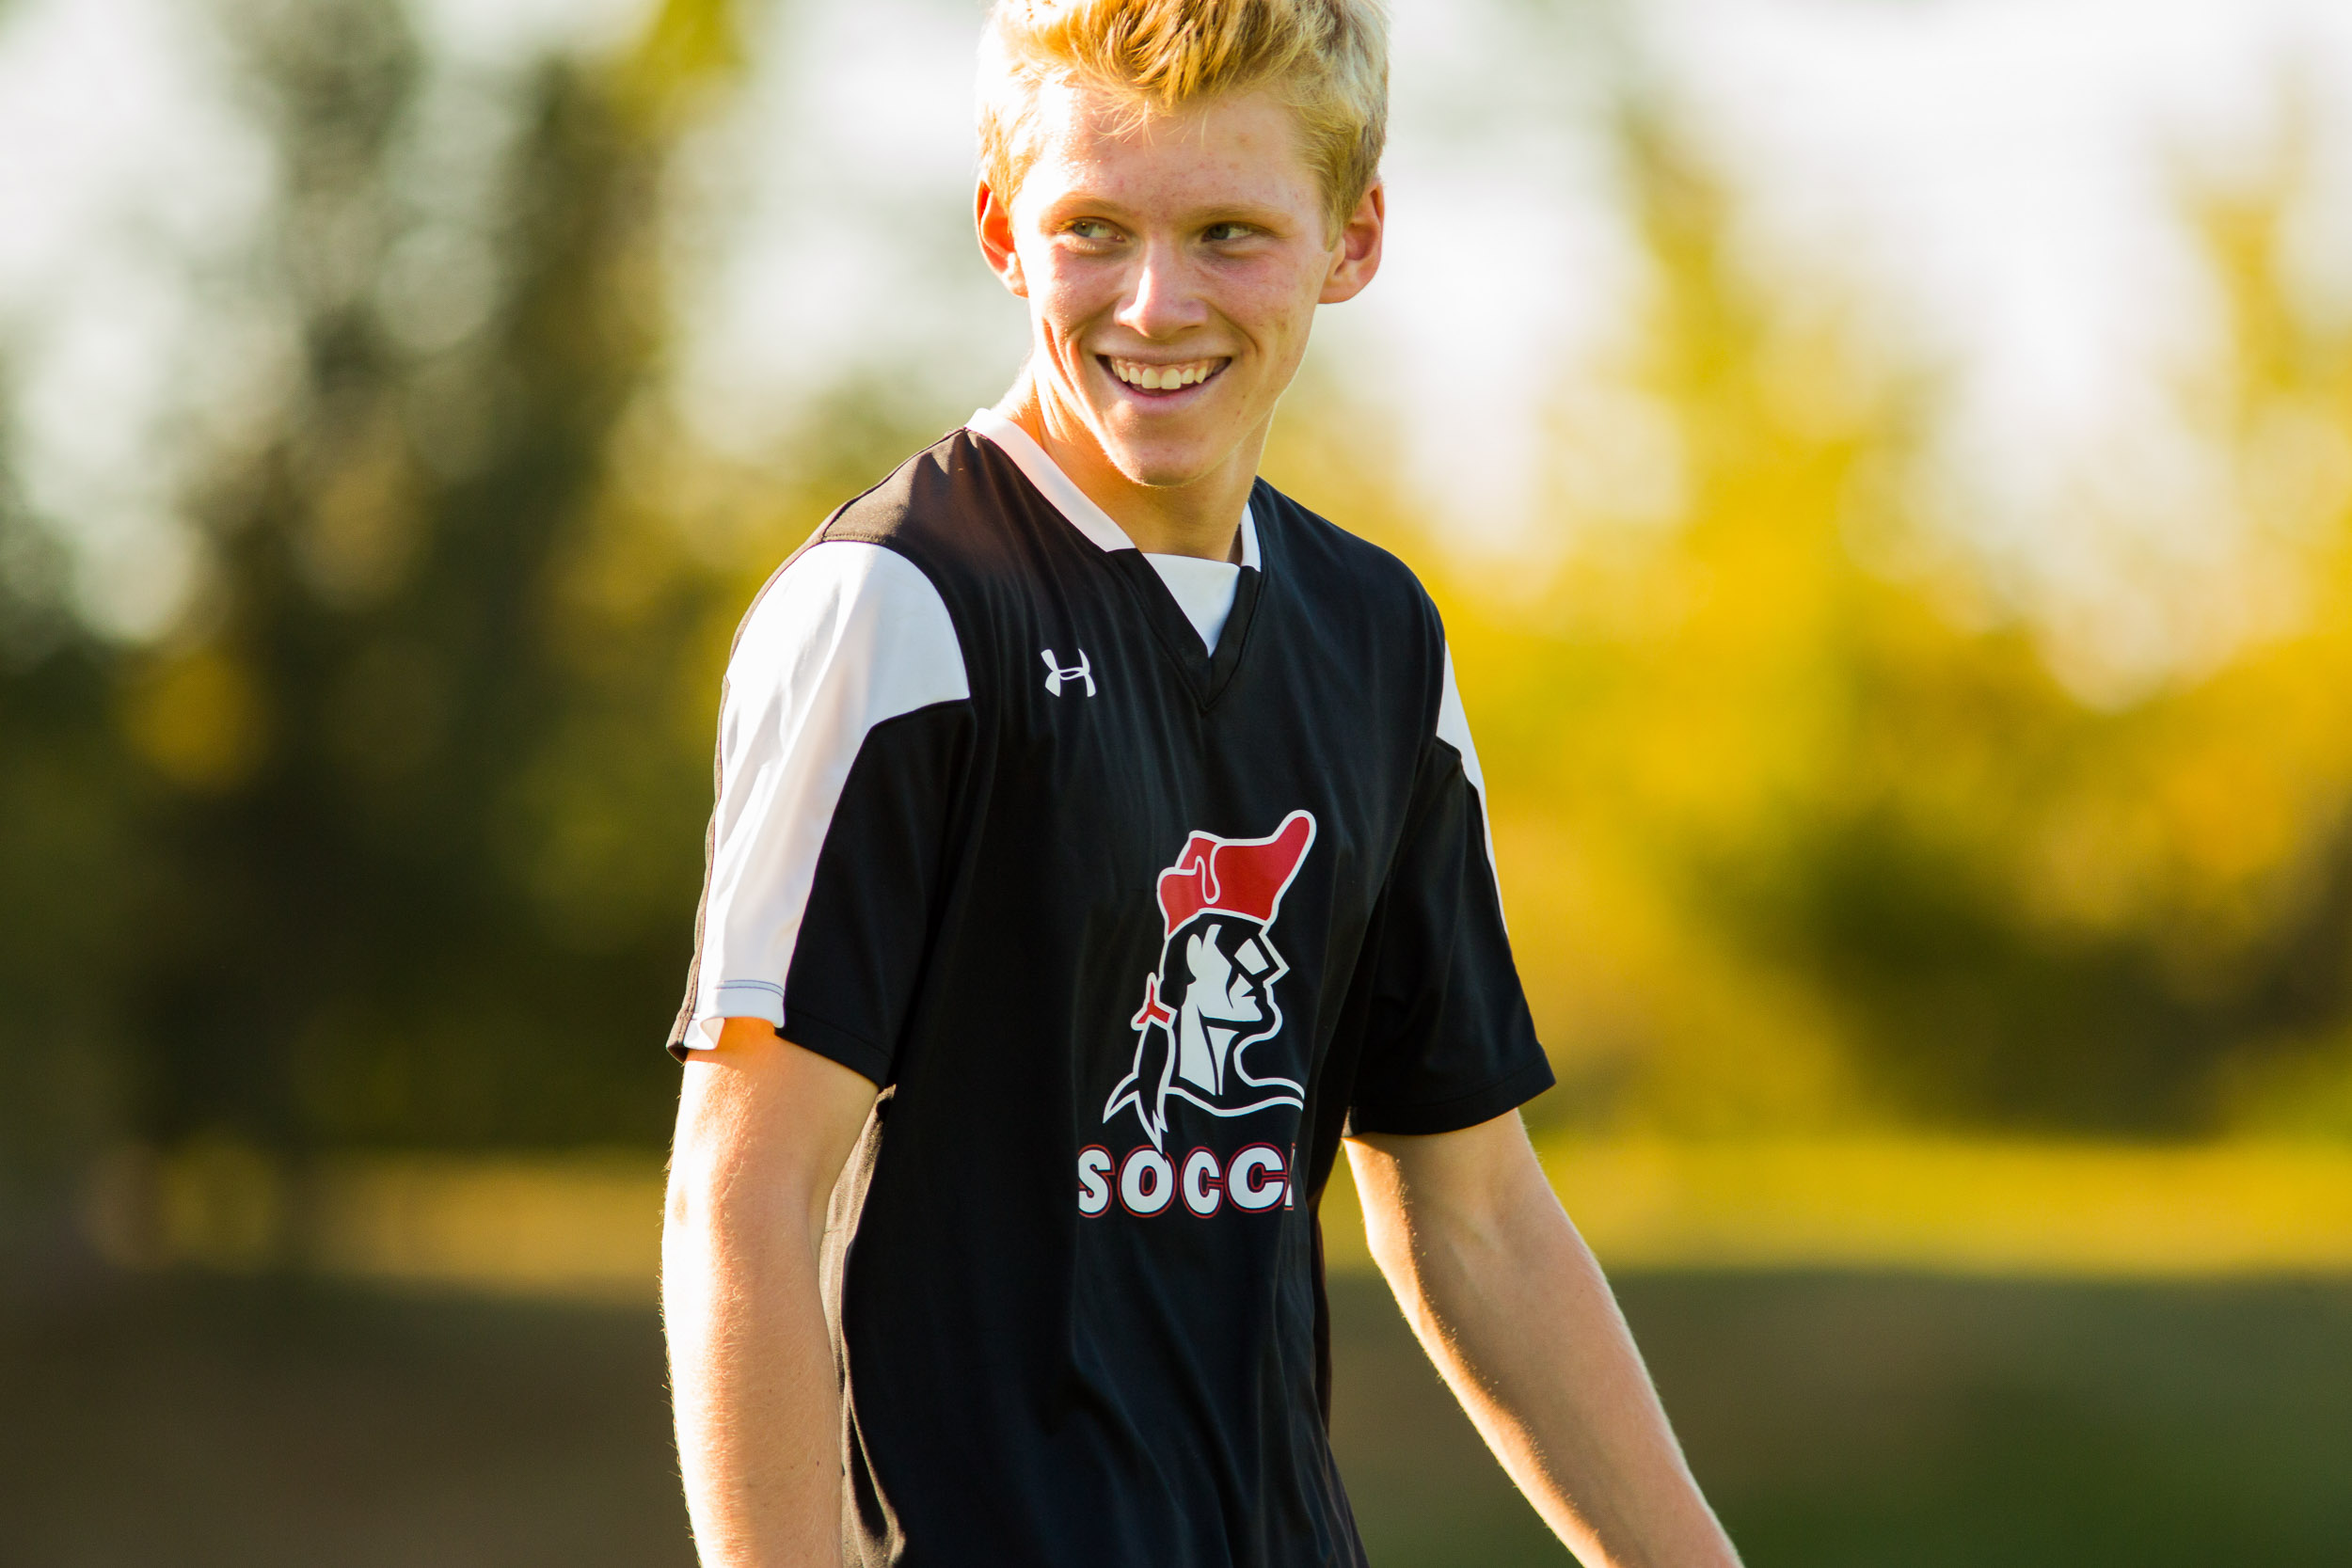 Newark Academy soccer athlete boy Michael Branscom Photography.